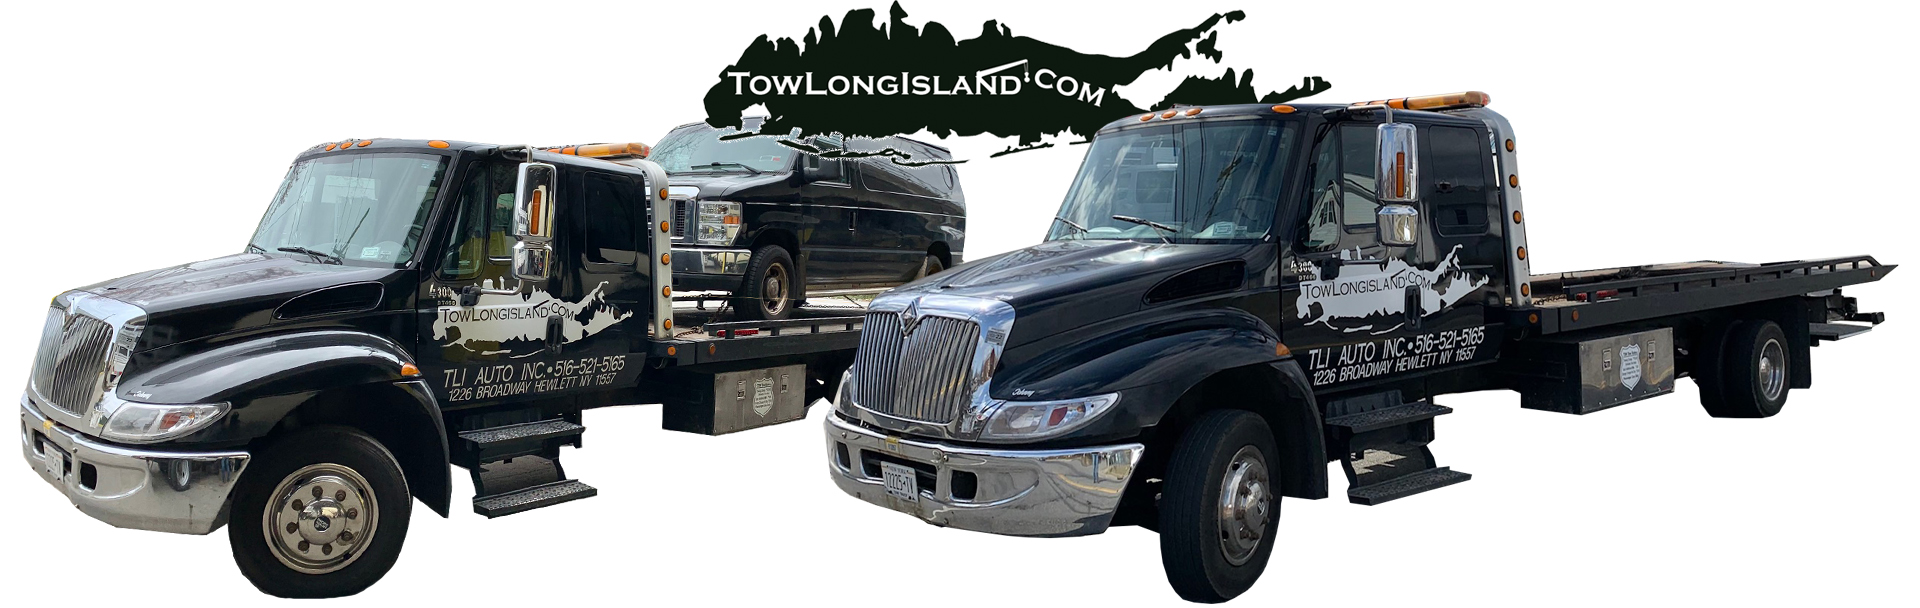 TowLongIsland.com | Tow Truck Professional Services | Valley Stream, Long Island, New York